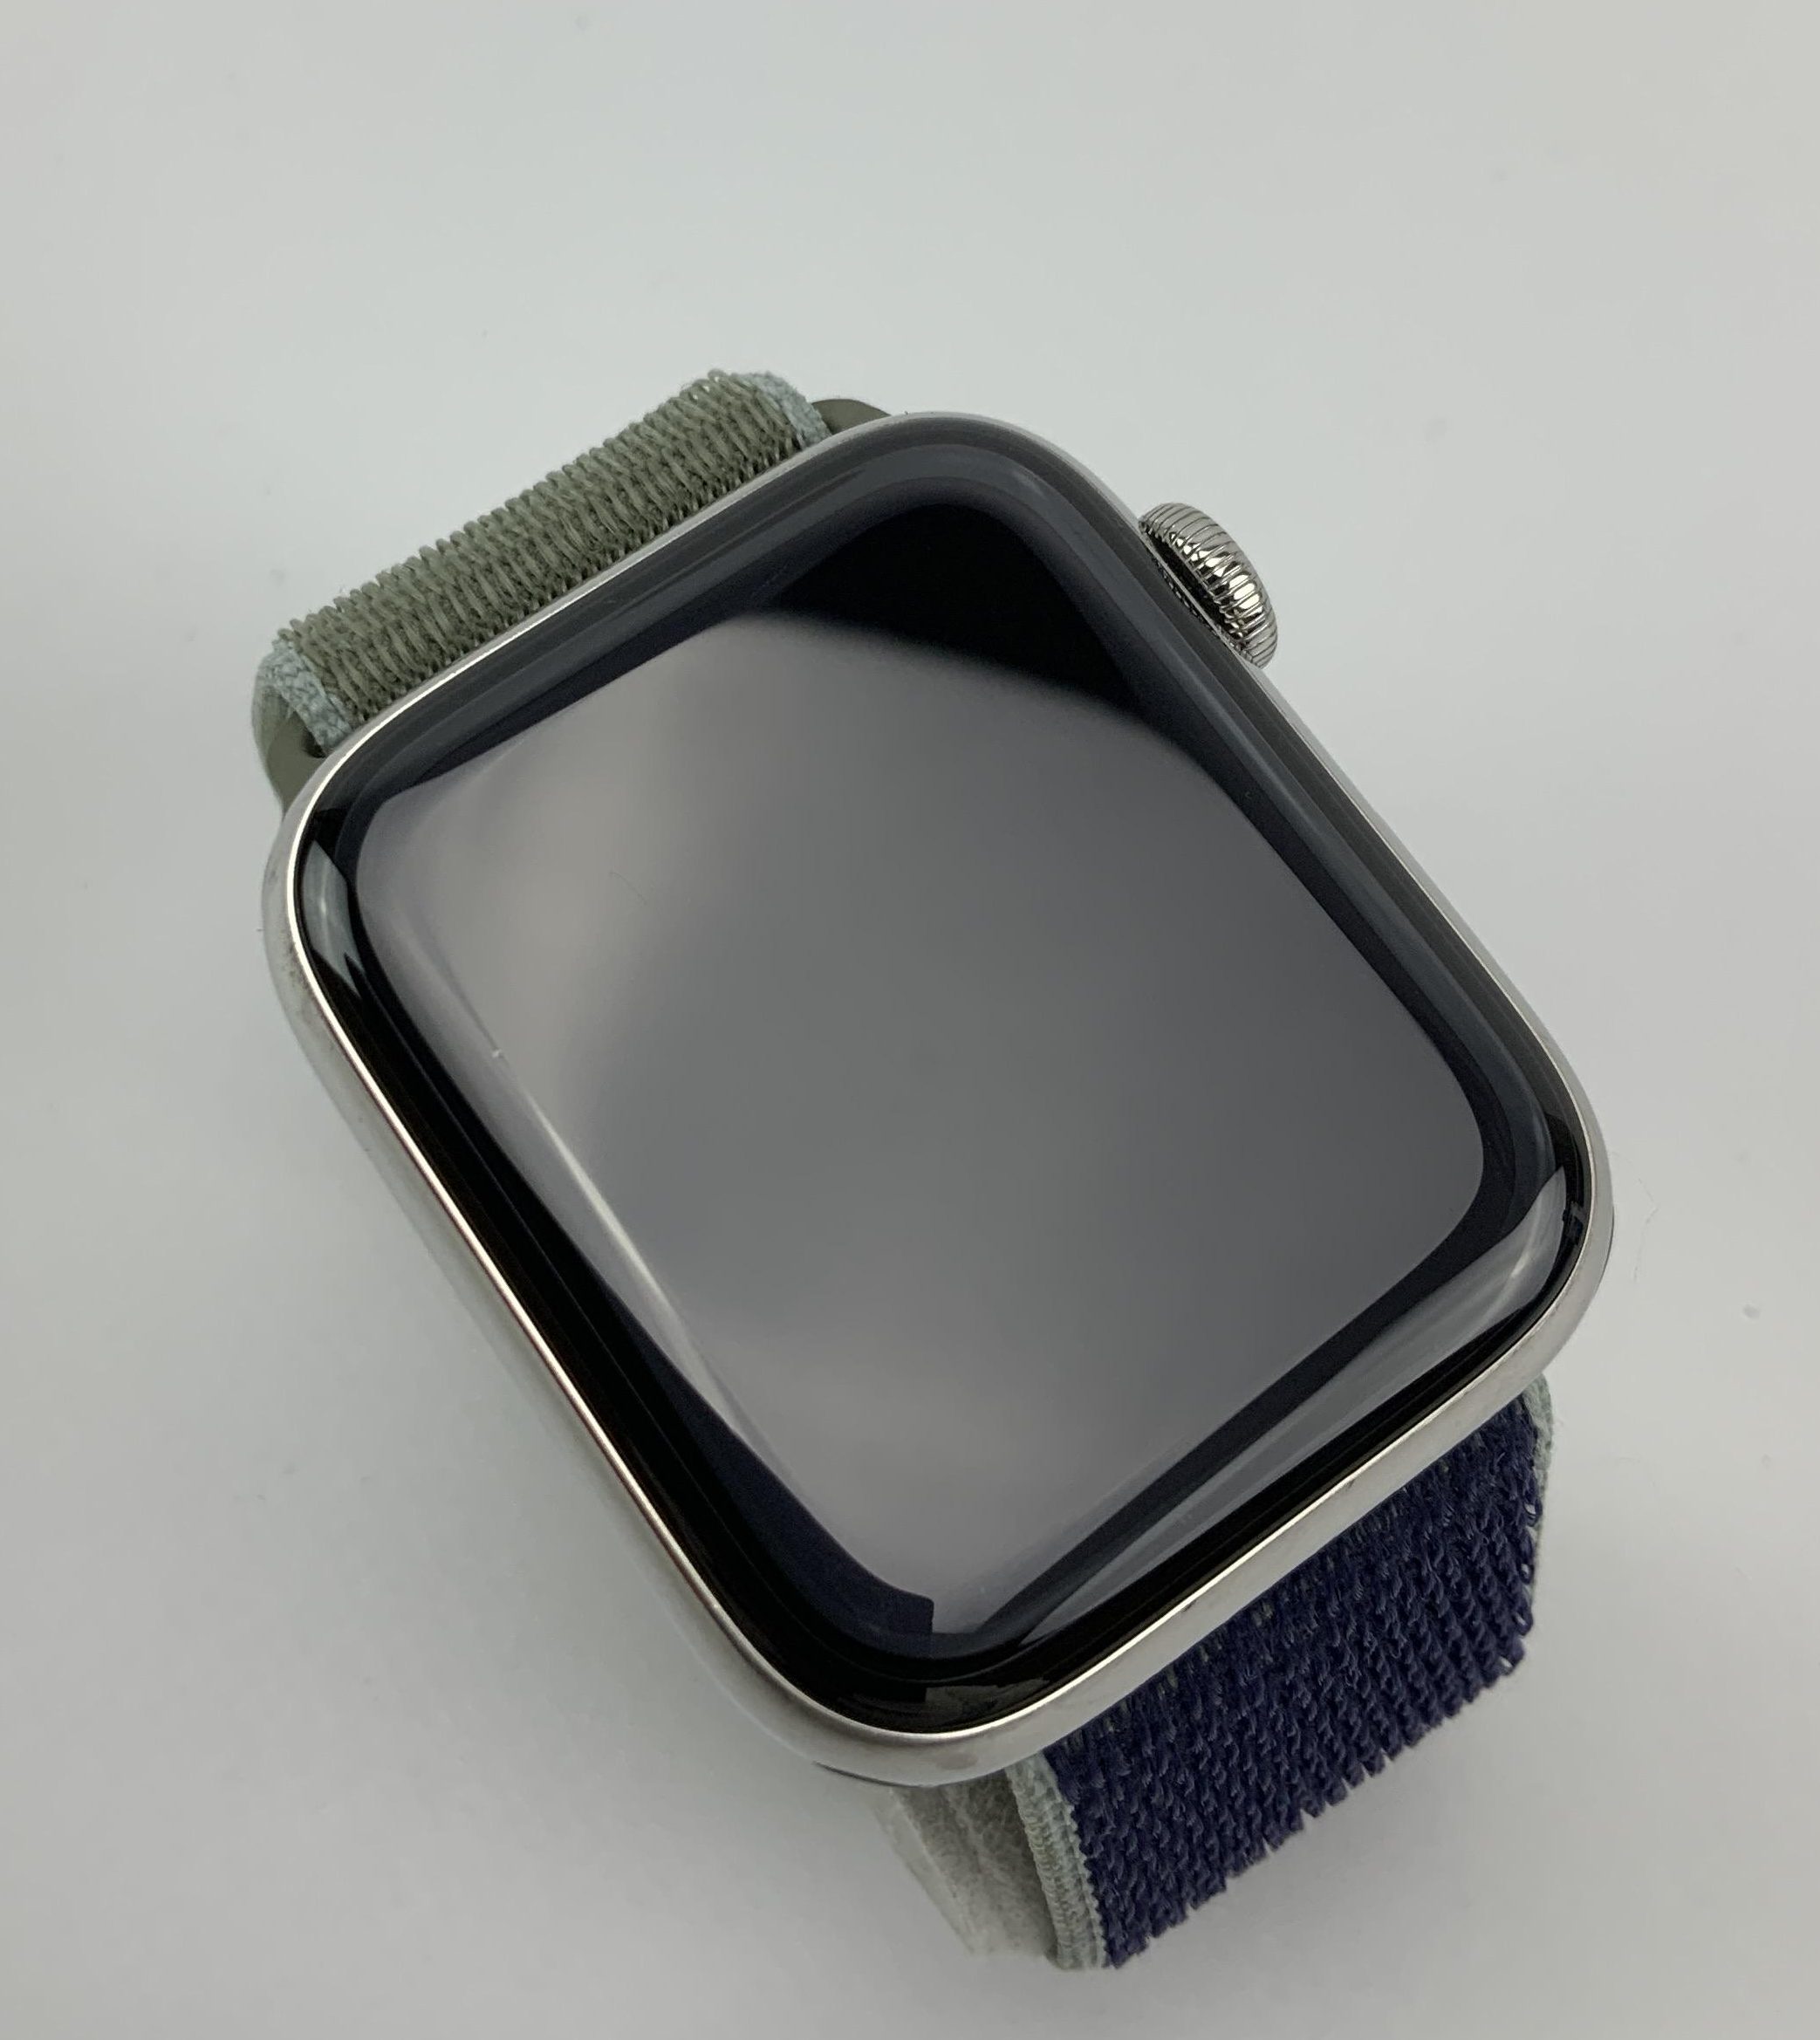 Watch Series 5 Steel Cellular (44mm), Silver, Afbeelding 2